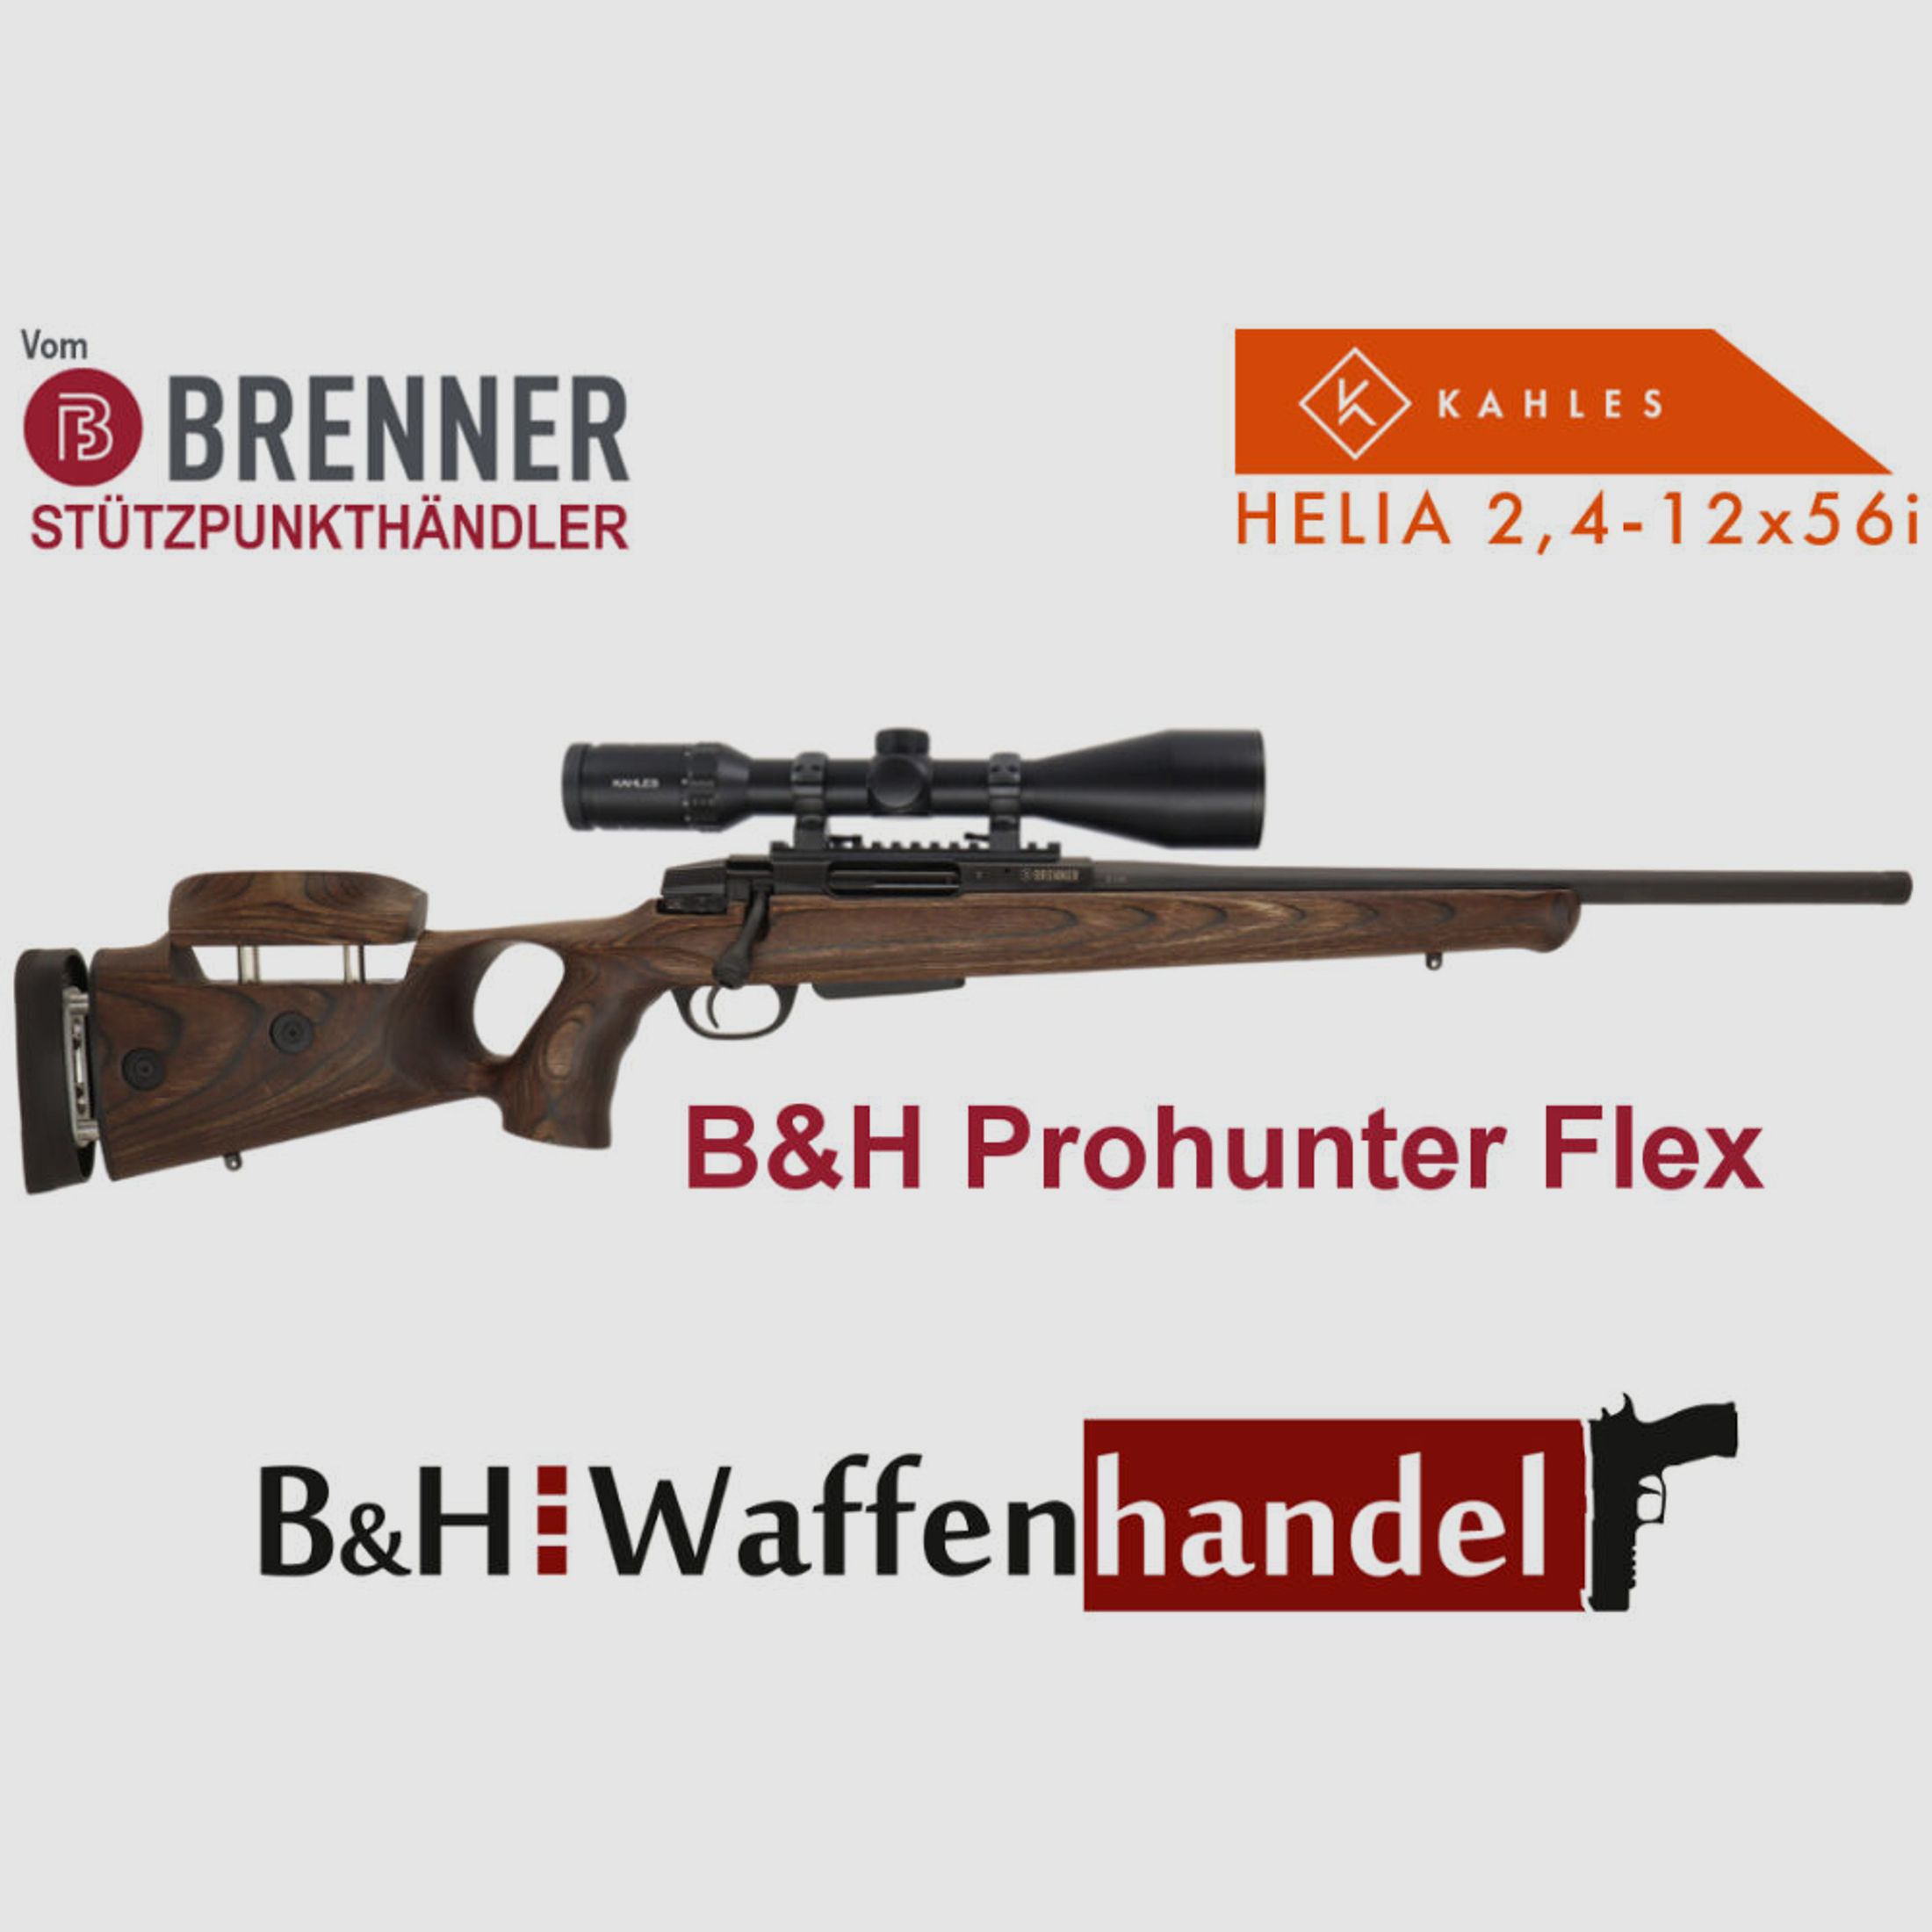 Brenner Komplettpaket:	 BR 20 B&H Prohunter Flex Lochschaft mit doppelter Verstellung inkl. Kahles Helia 2.4-12x56i fertig montiert Jagd Repetierer